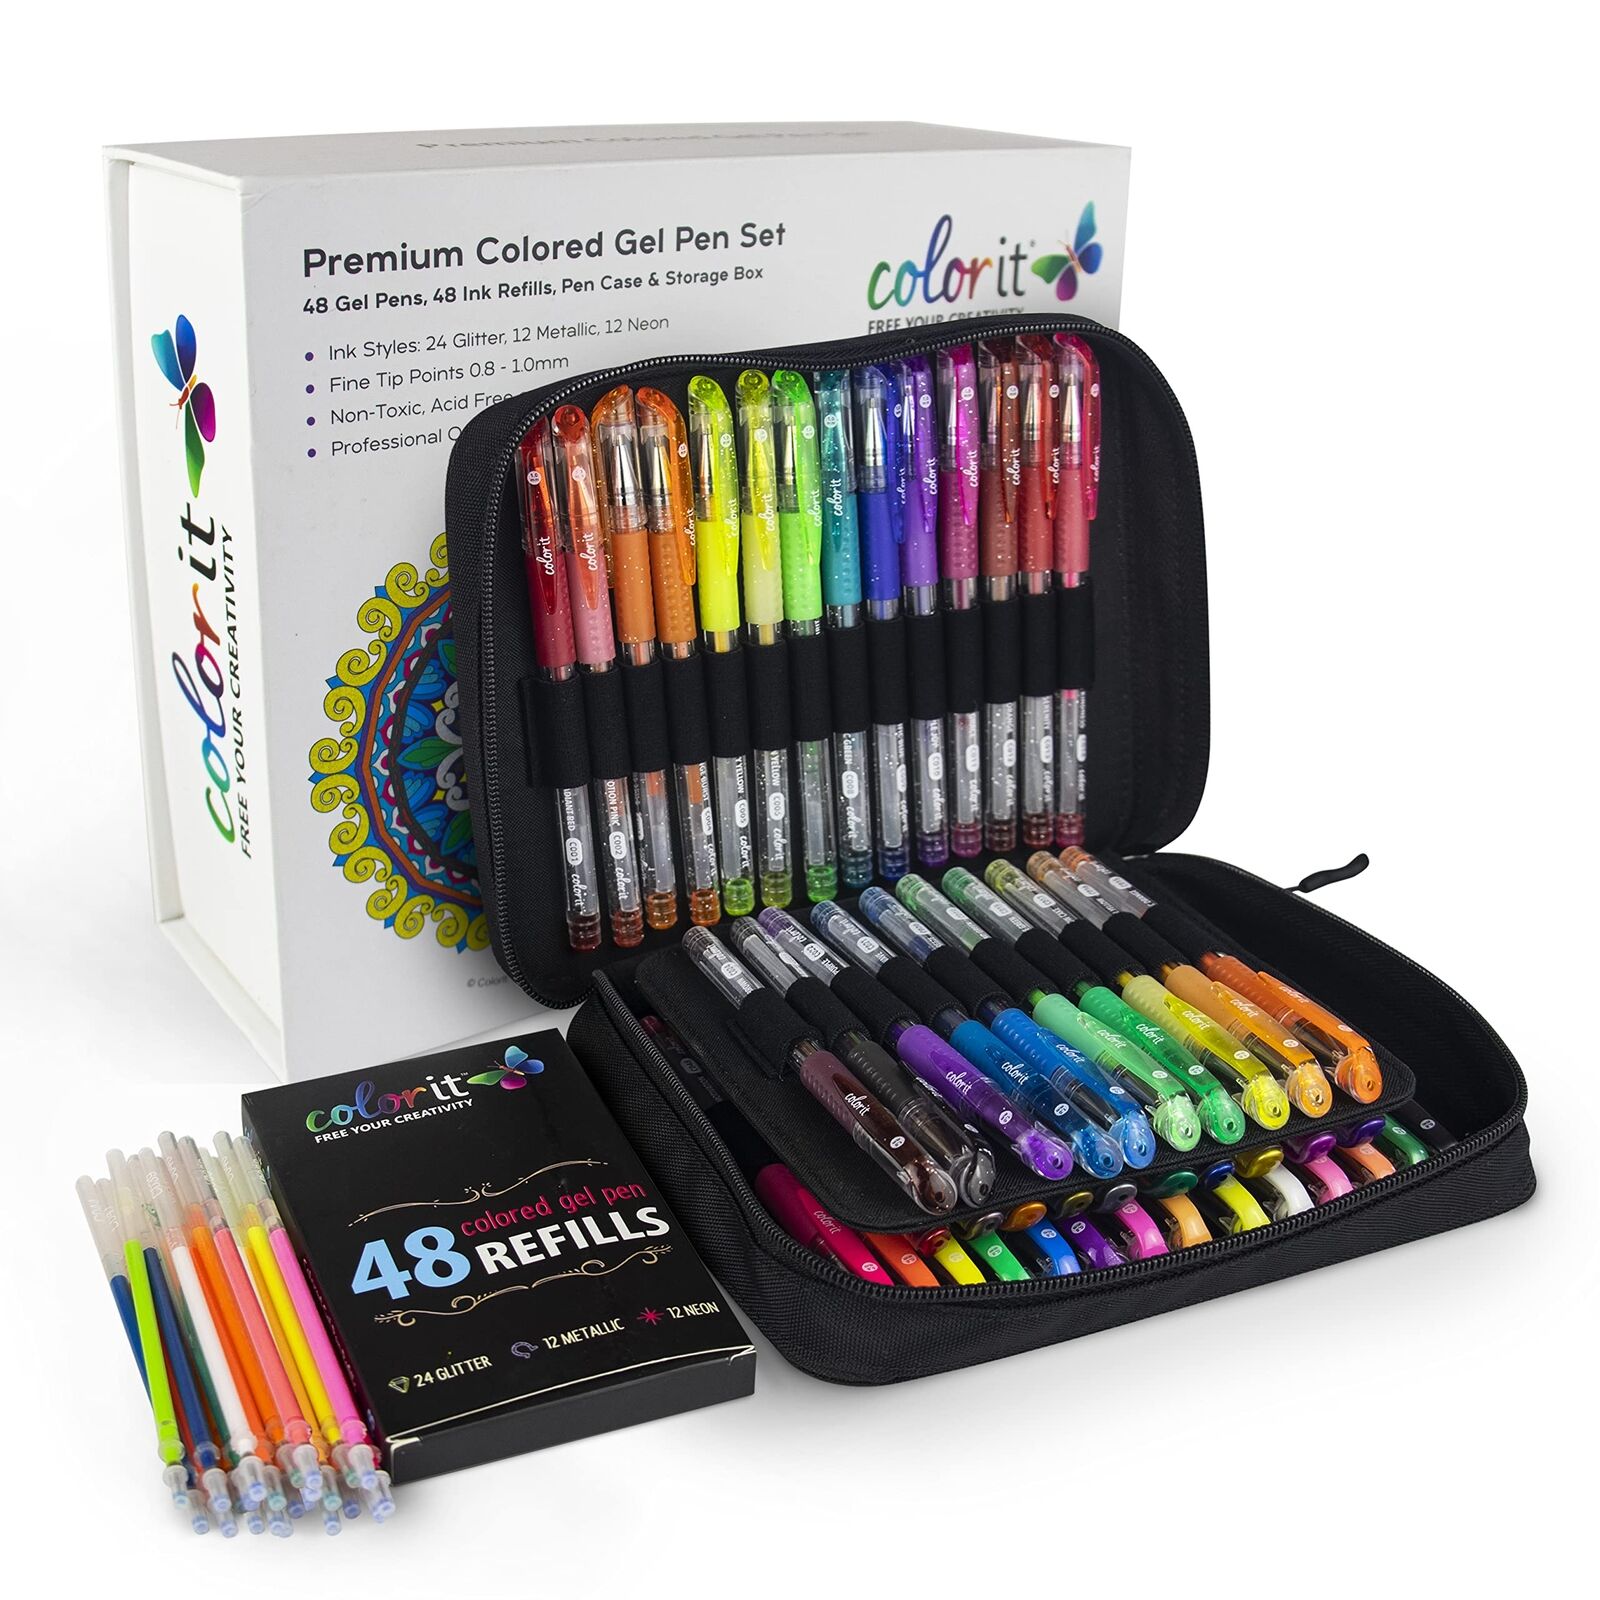 ColorIt Glitter Gel Pens For Adult Coloring Books 96 Pack - 48 Premium Qualit...